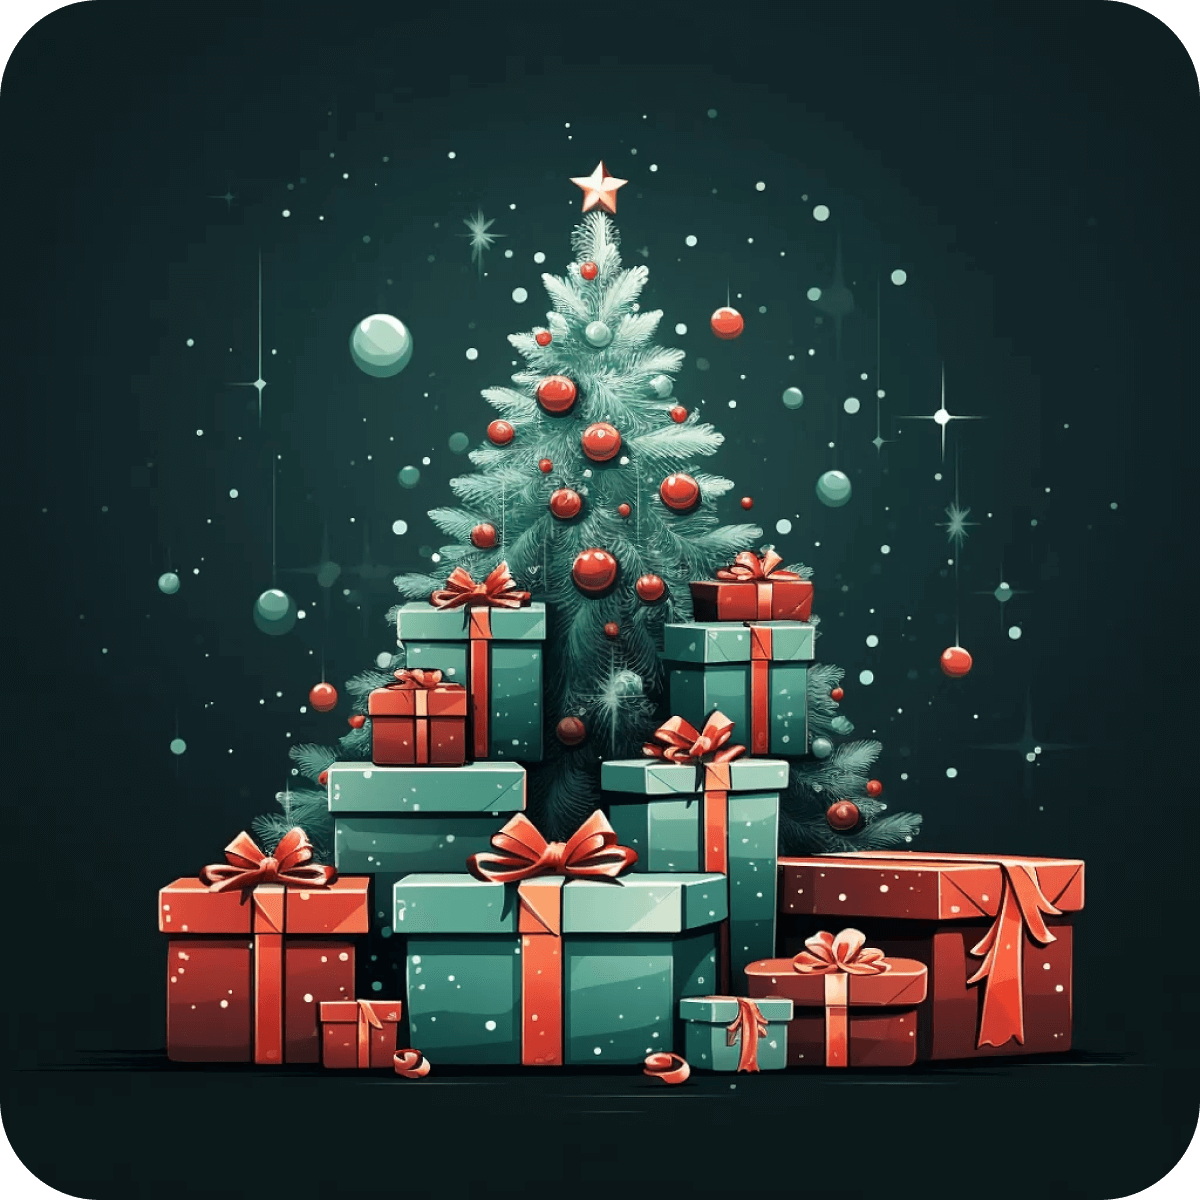 Christmas Gif Maker - Online - Free